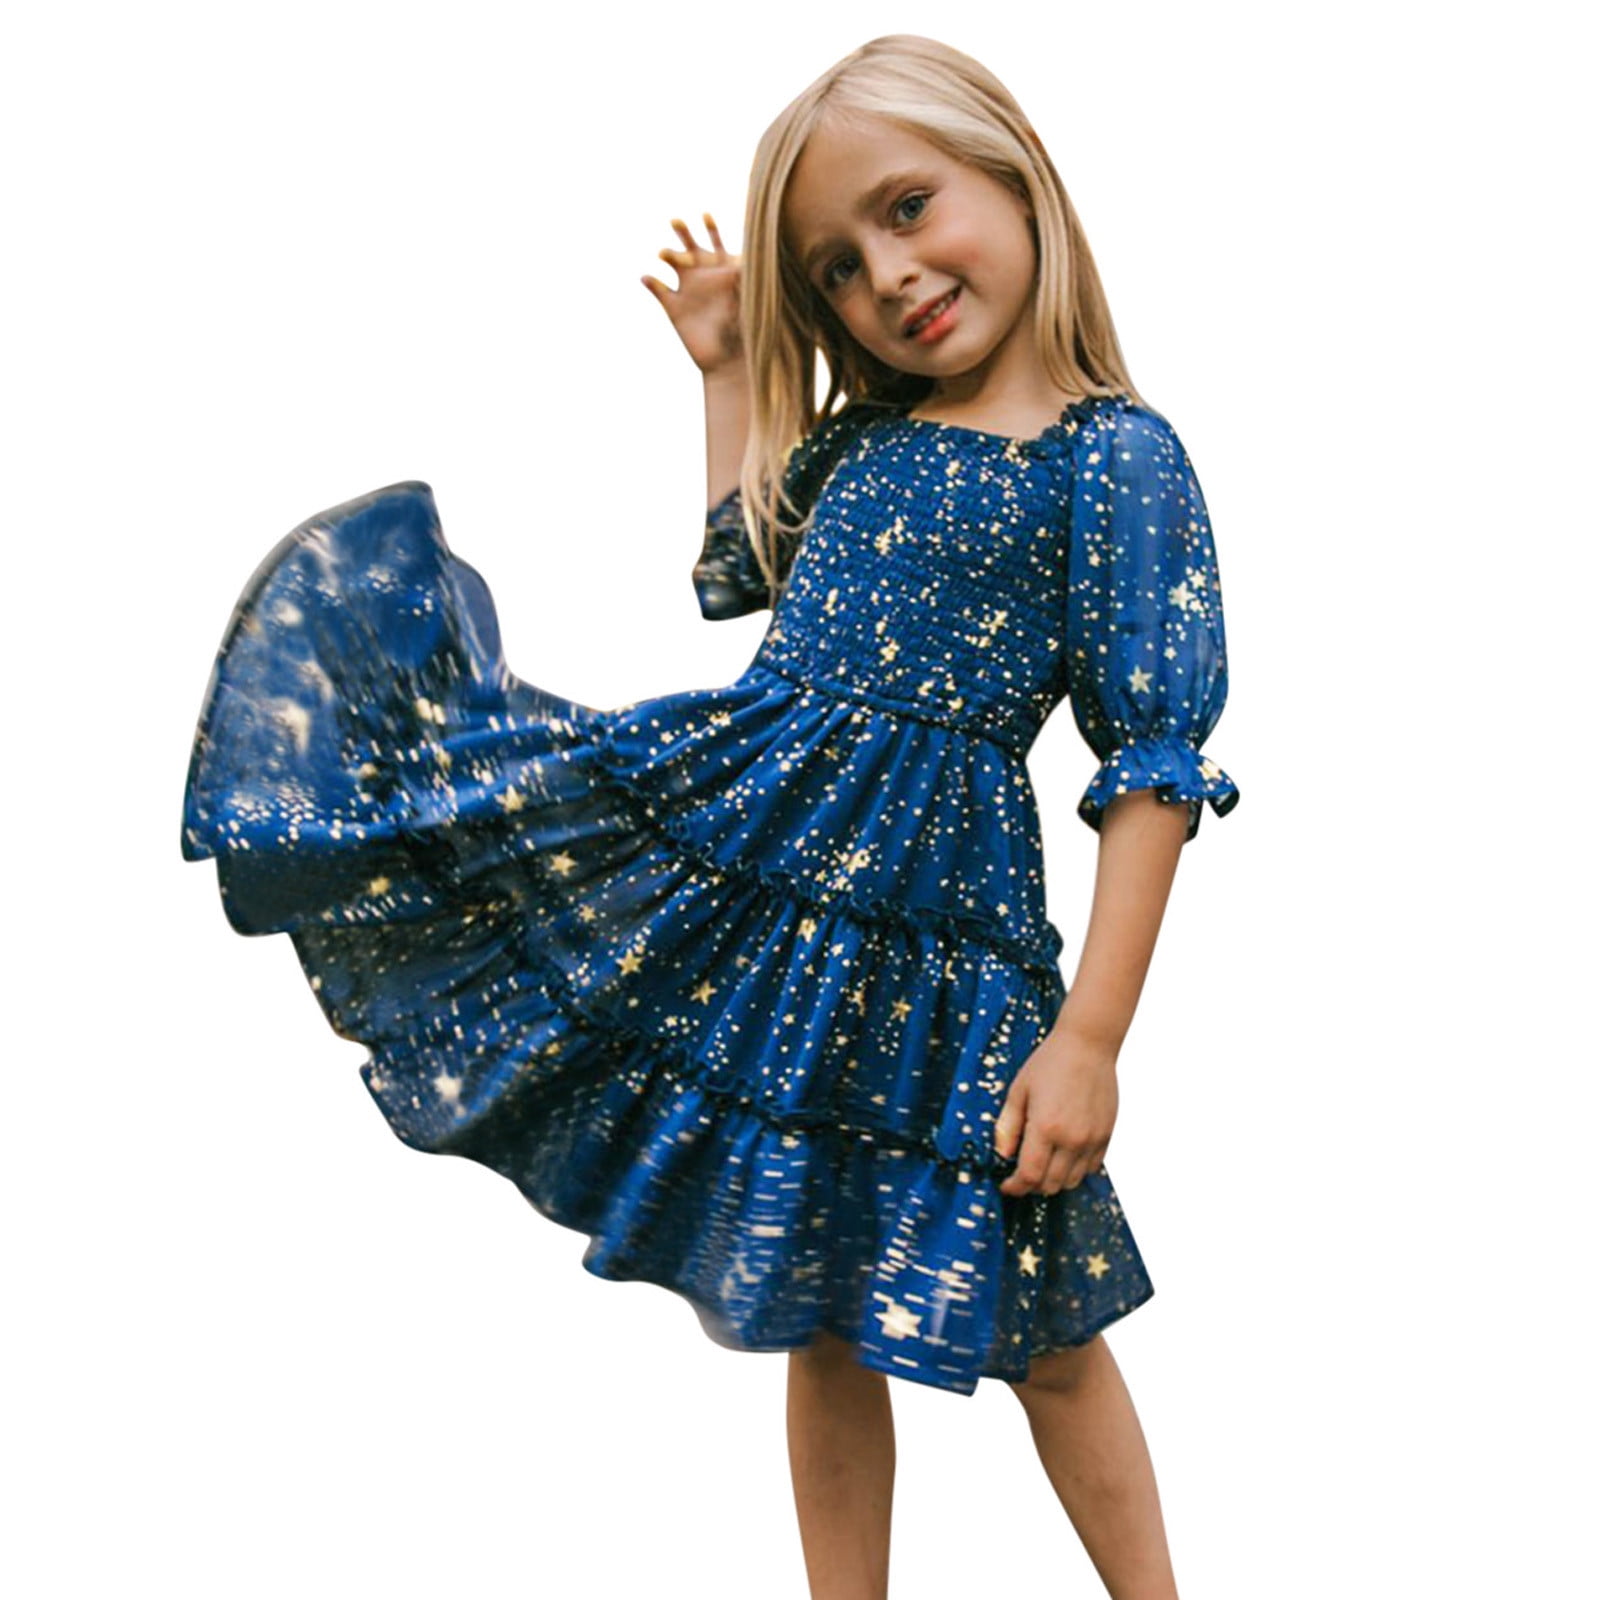 Buy Sagun Dresses Baby Girls Light Green Floral A-Line Frock (0-6 M)|Kids  Wear|Girls Frock|Kids Party Wear|Clothing Accessories|Baby Girls|Dresses|Frock|  Online at Best Prices in India - JioMart.